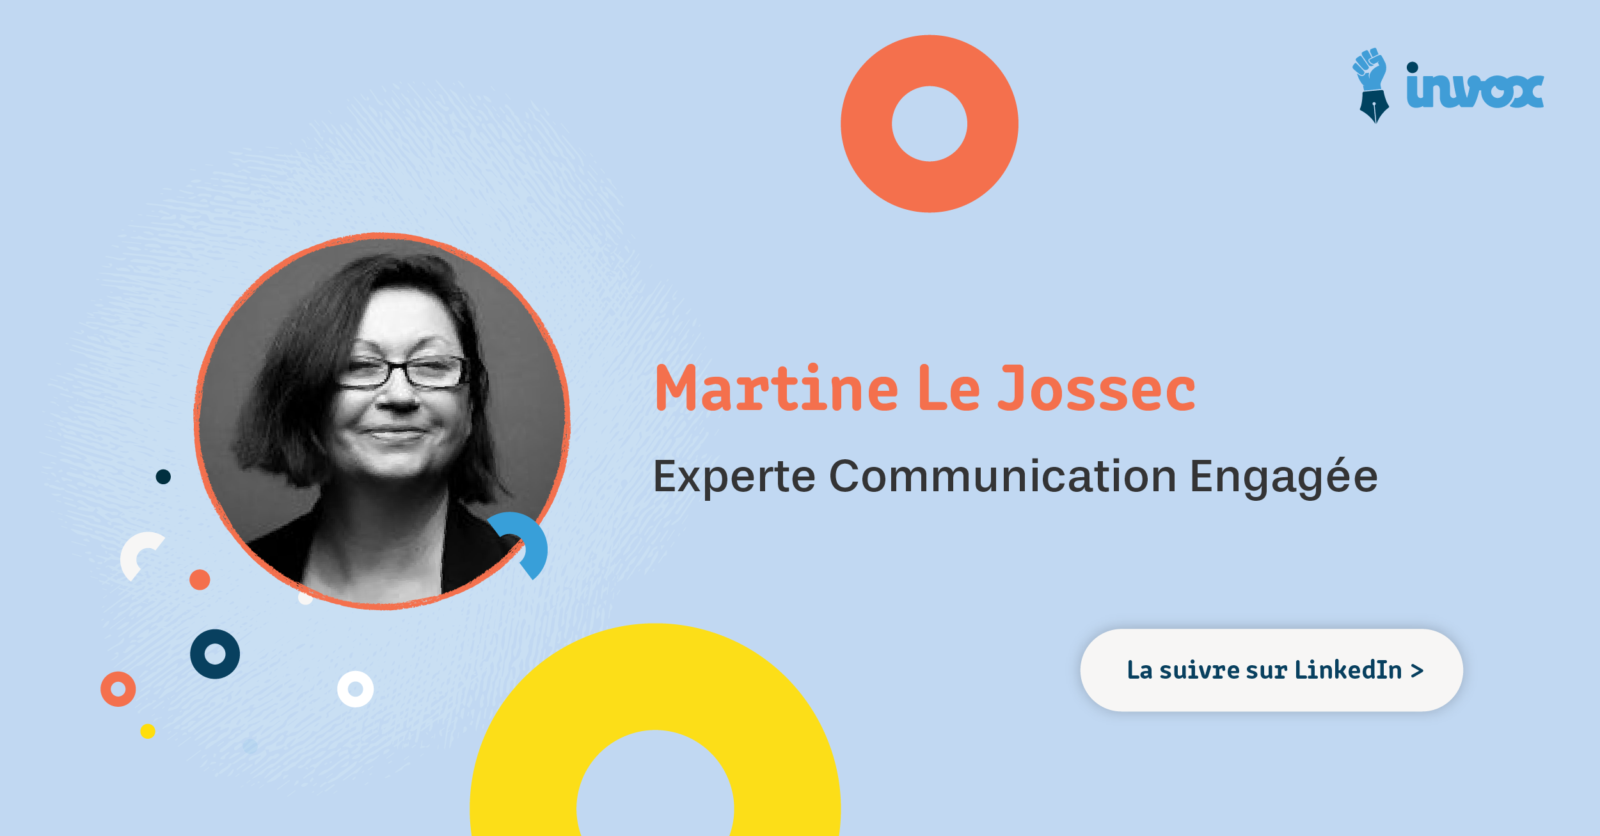 Martine Le Jossec